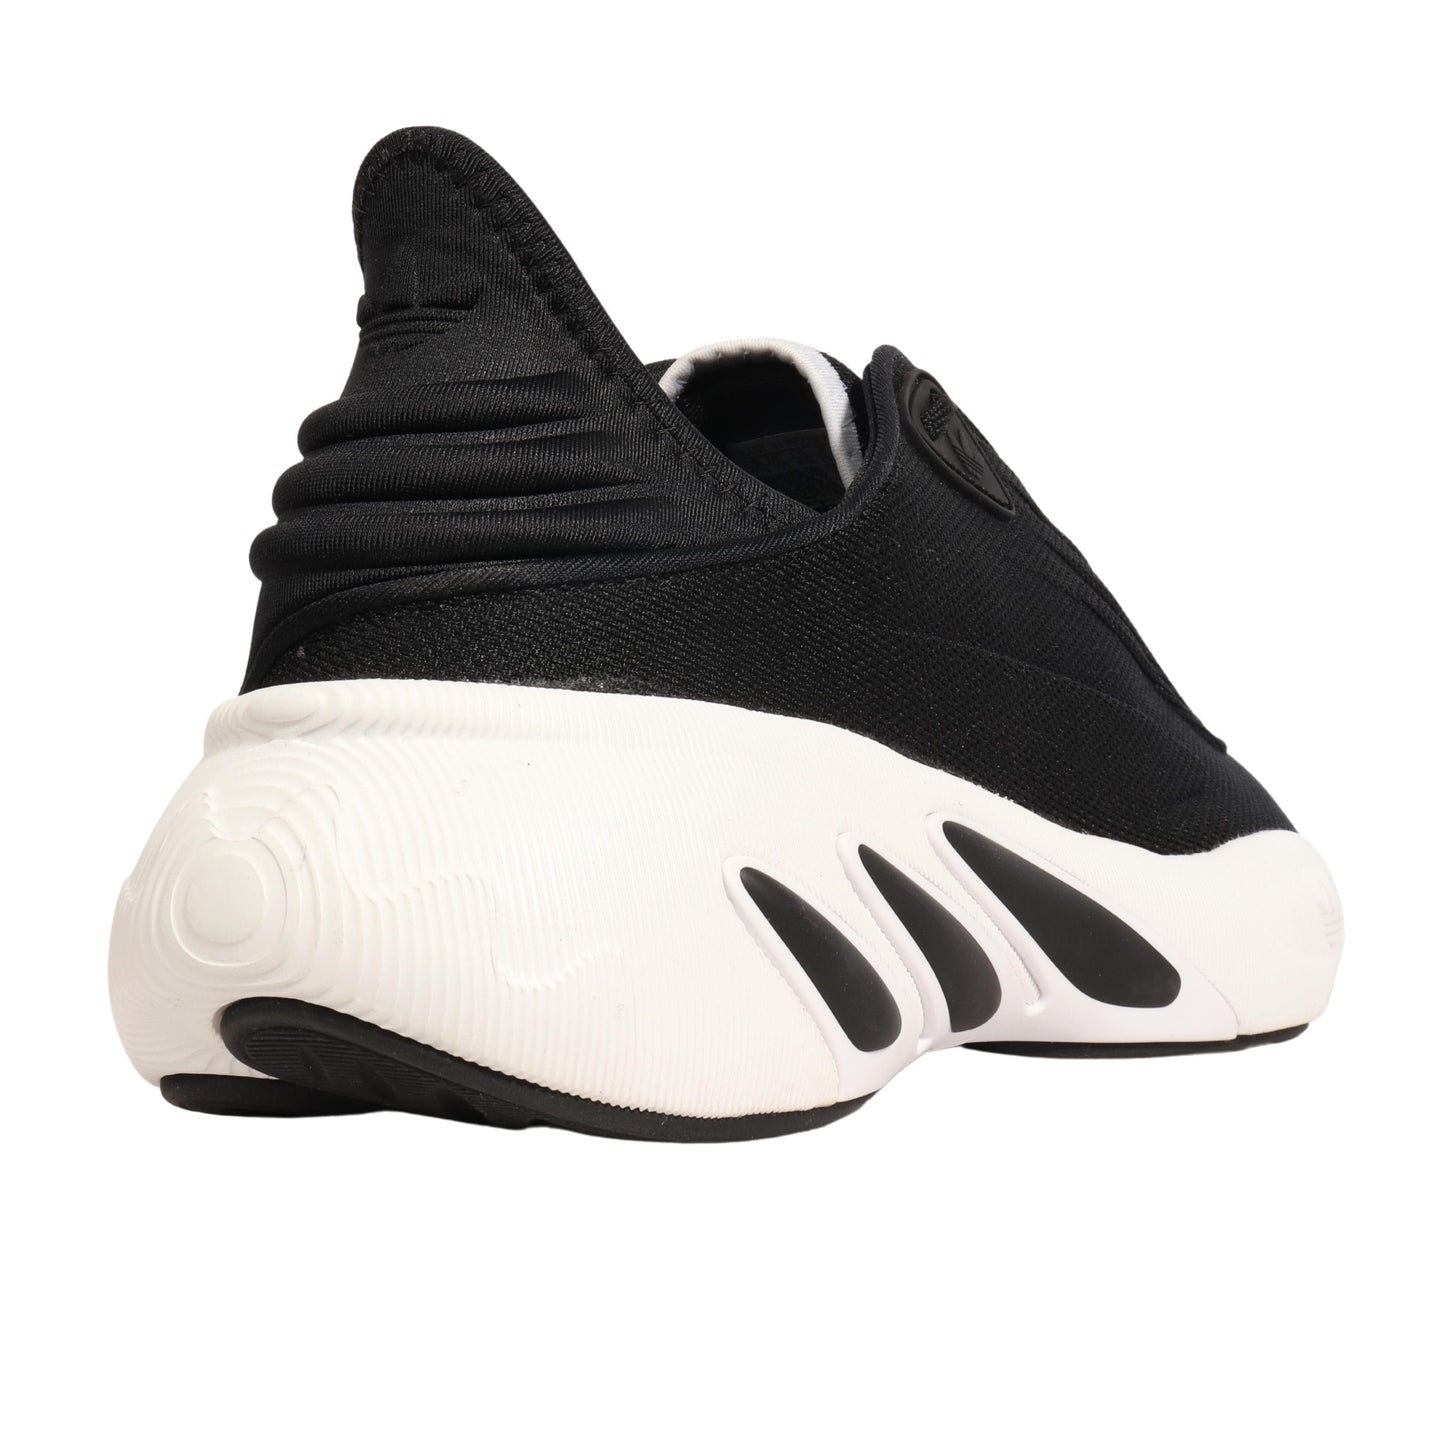 ADIDAS Athletic Shoes 46 / Black ADIDAS - Adifom SLTN black sports sneakers